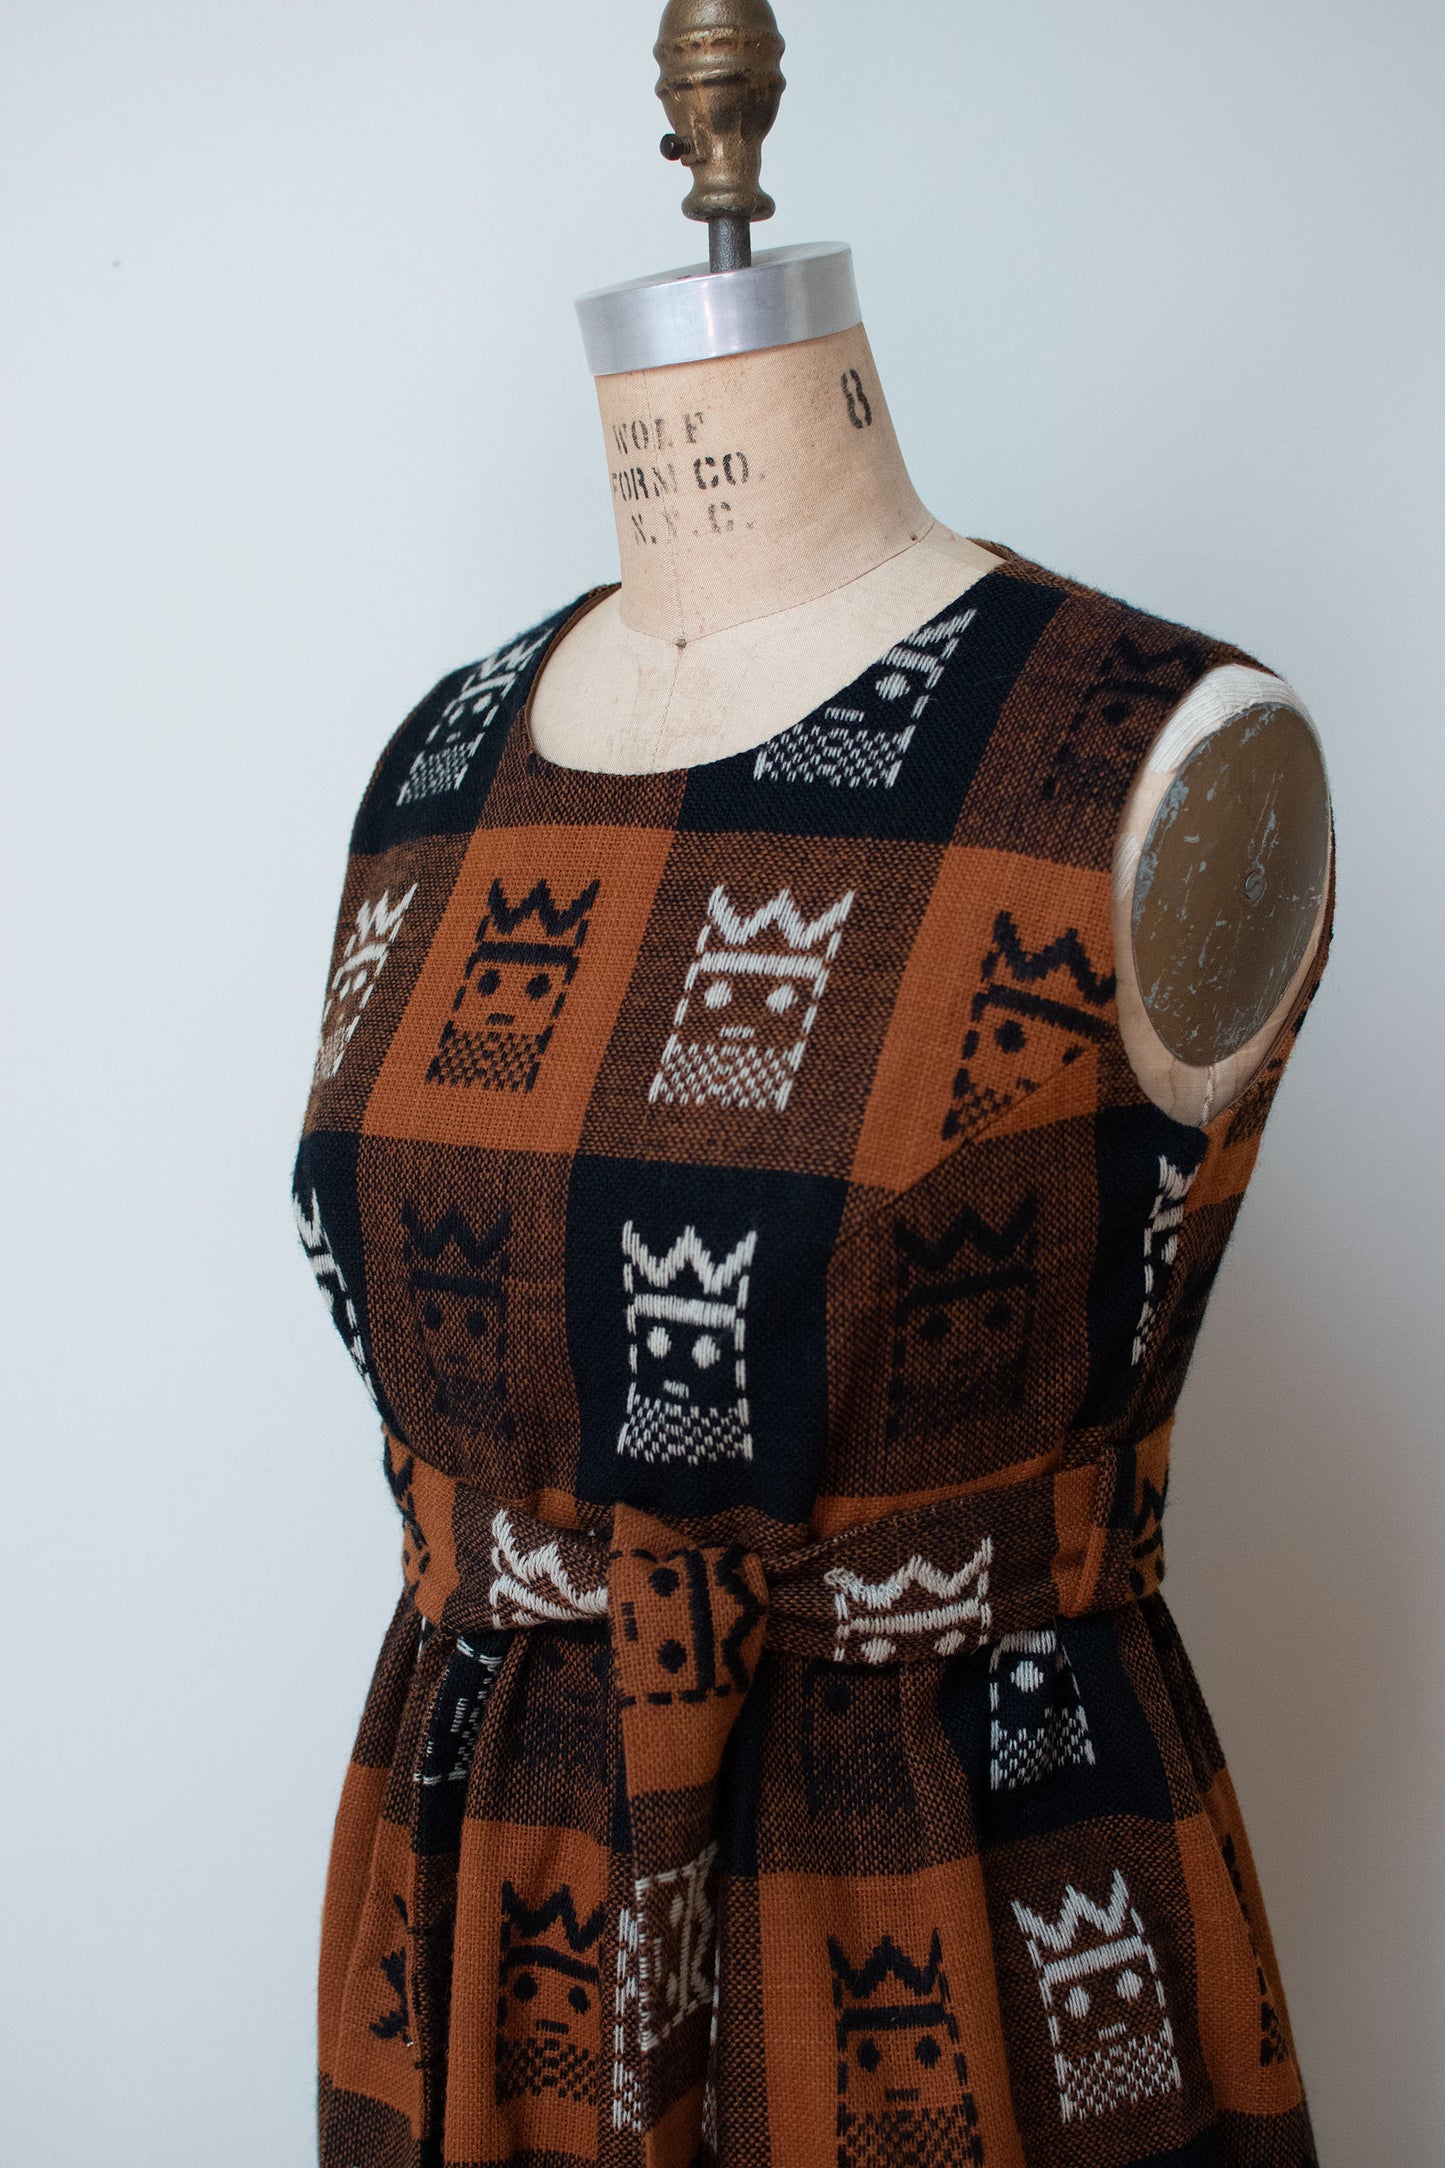 1970s checkmate Dress